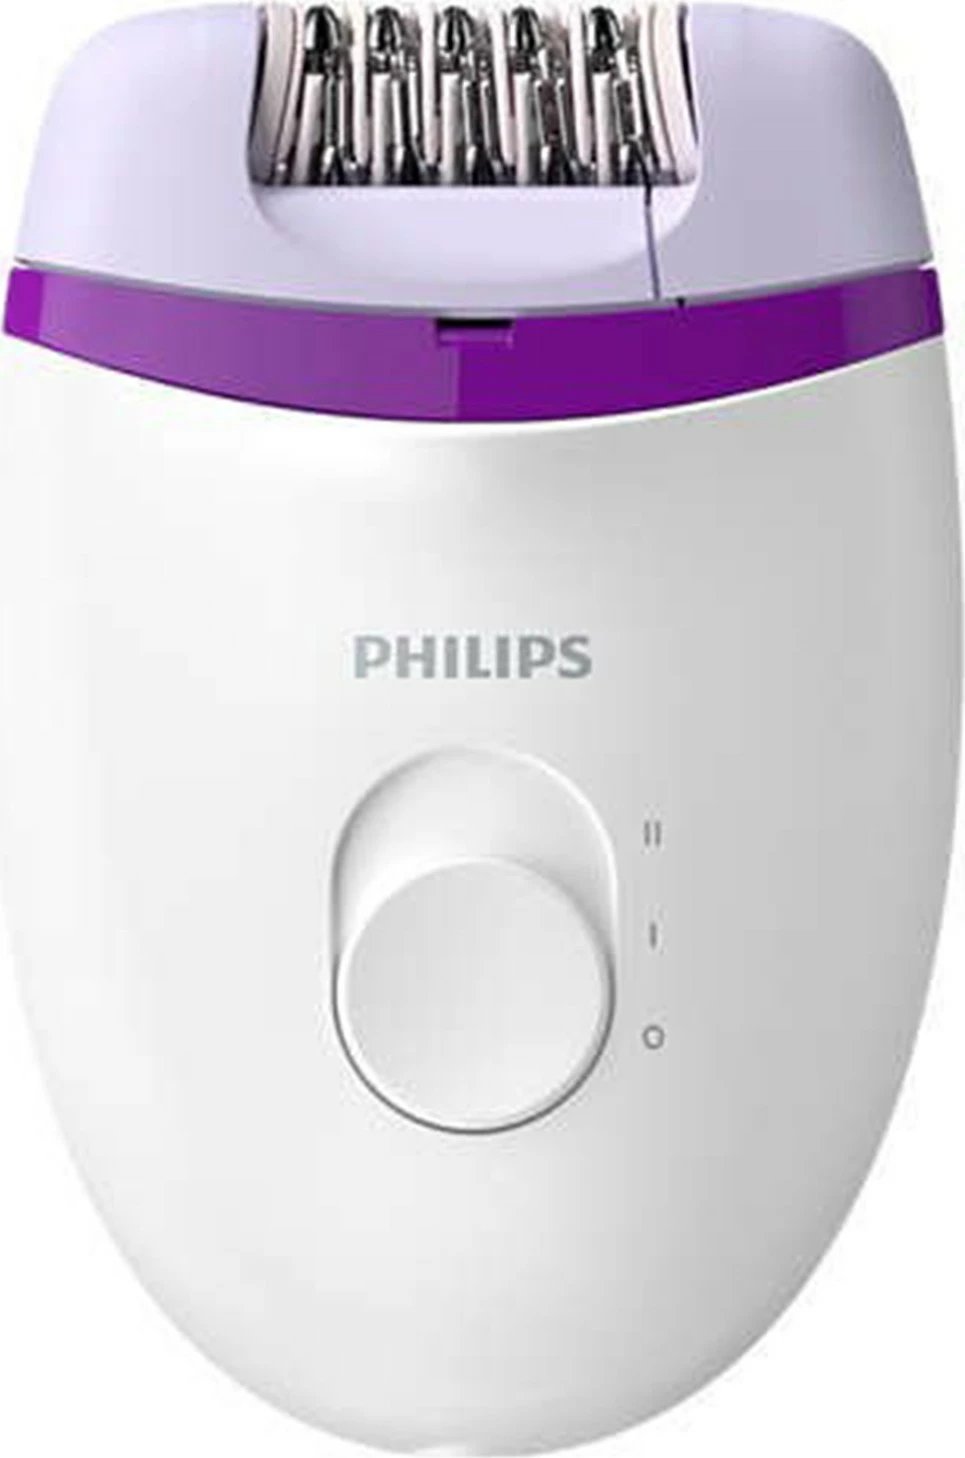 Epilator Philips, për femra